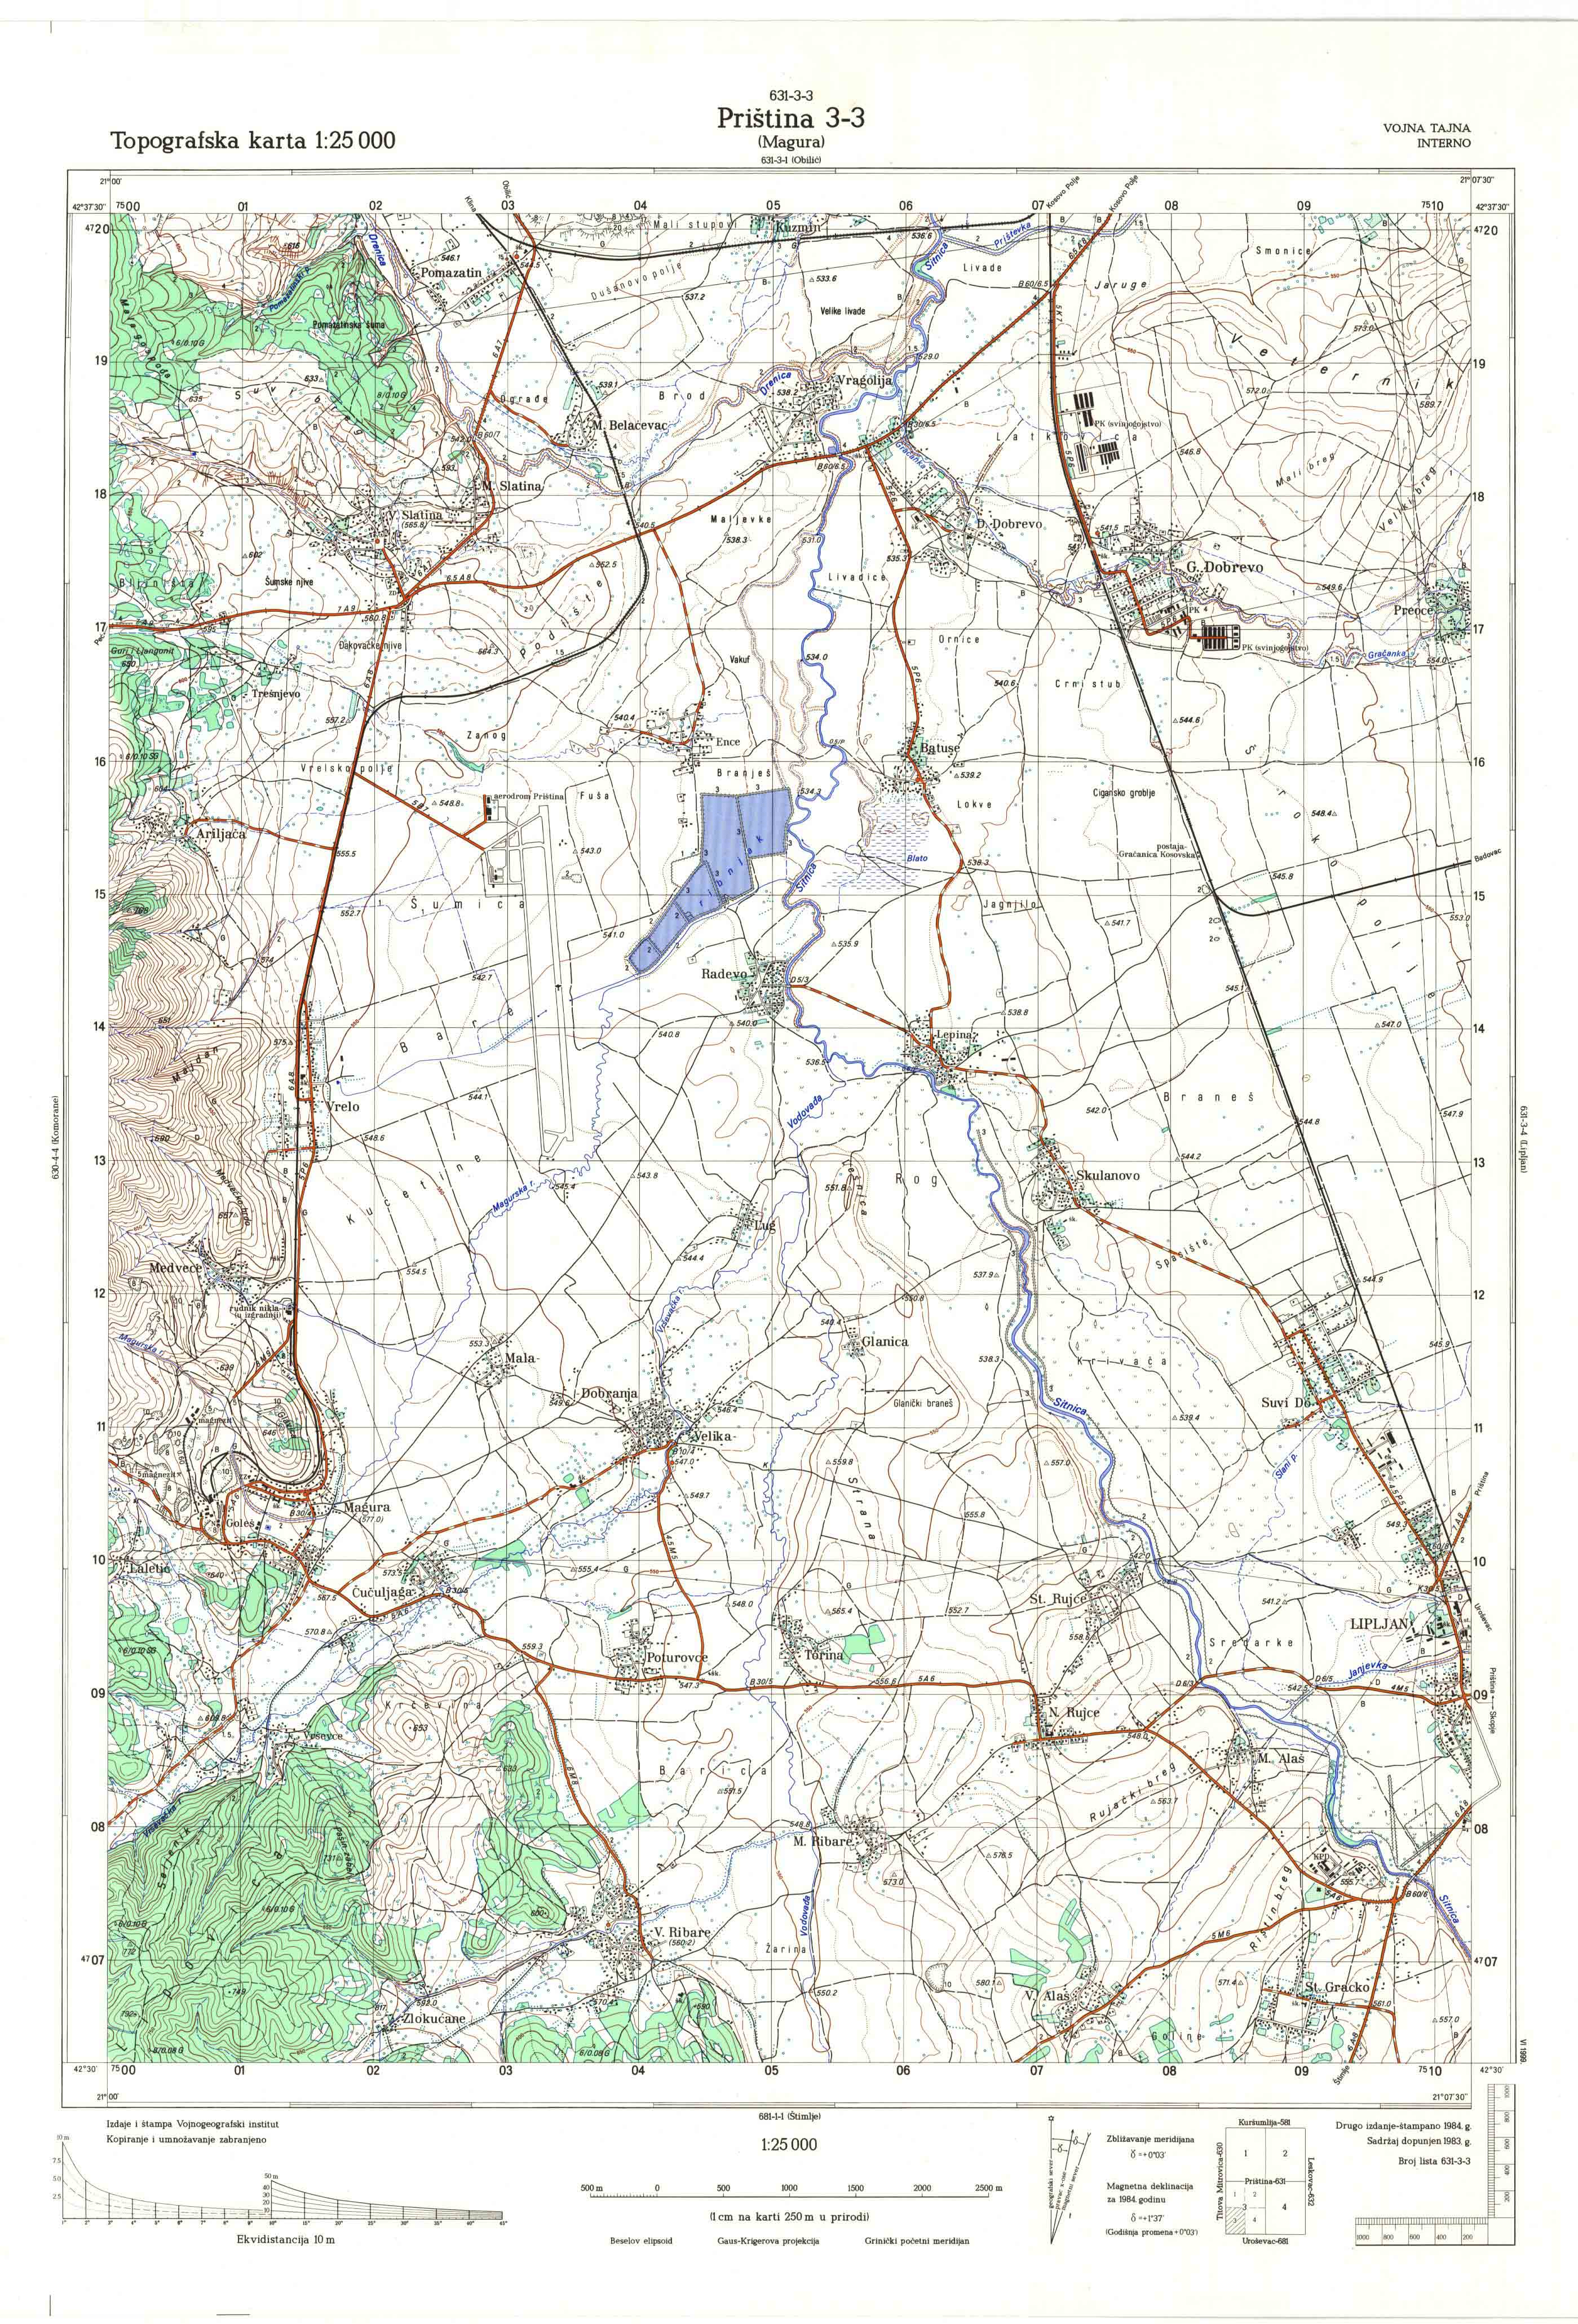  topografske karte kosove 25000 JNA  Prishtine